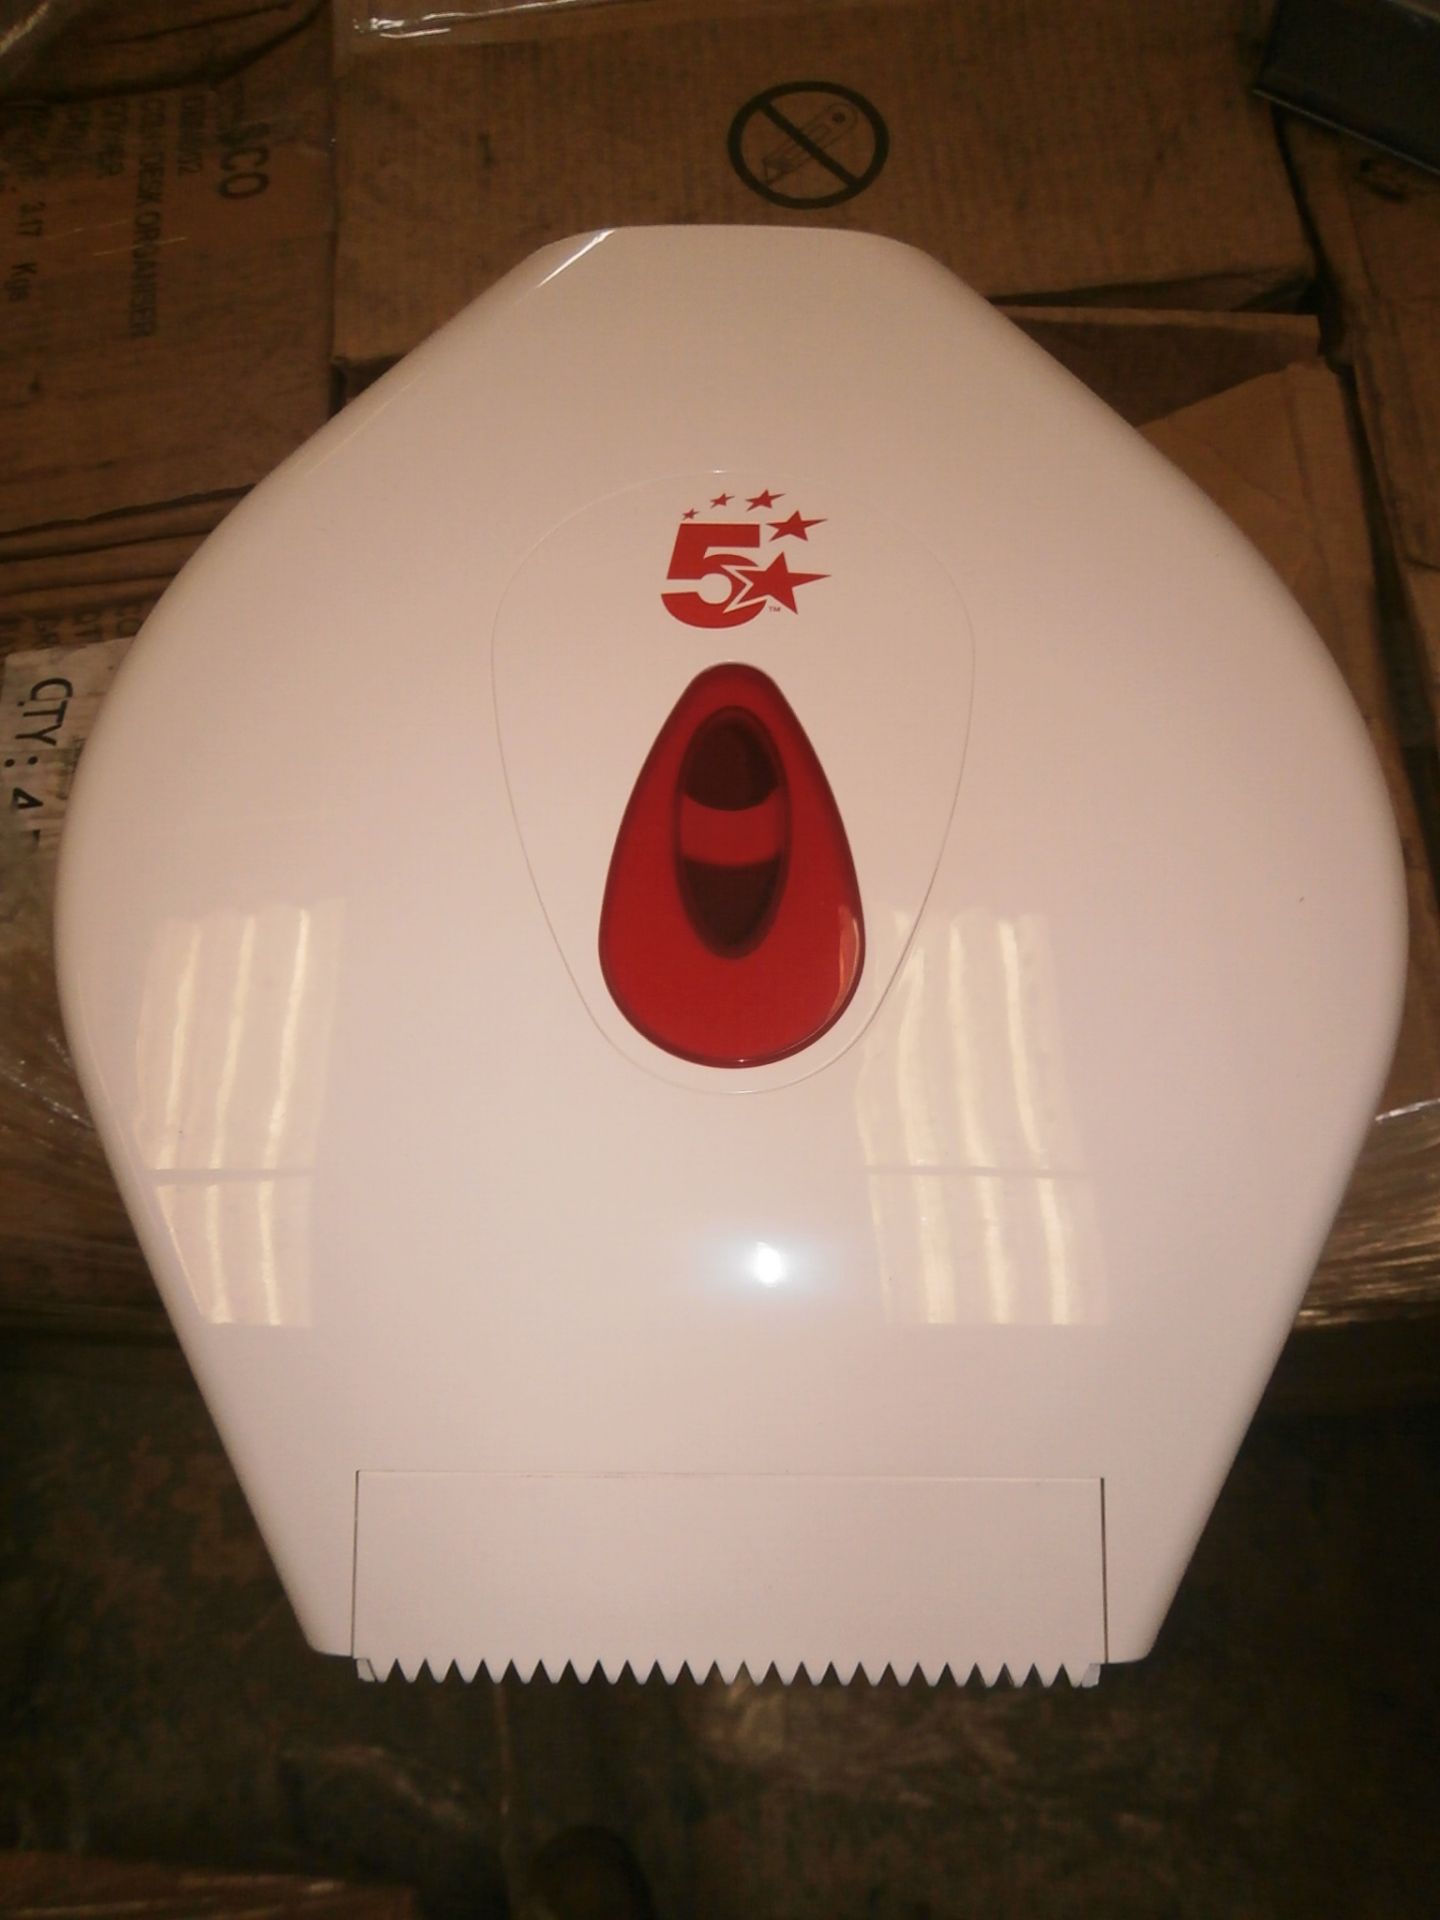 10 x 5 Star Jumbo Toilet Roll Dispensers Medium Product Code 929977 (RRP £24.71 Each, Total £247.10)